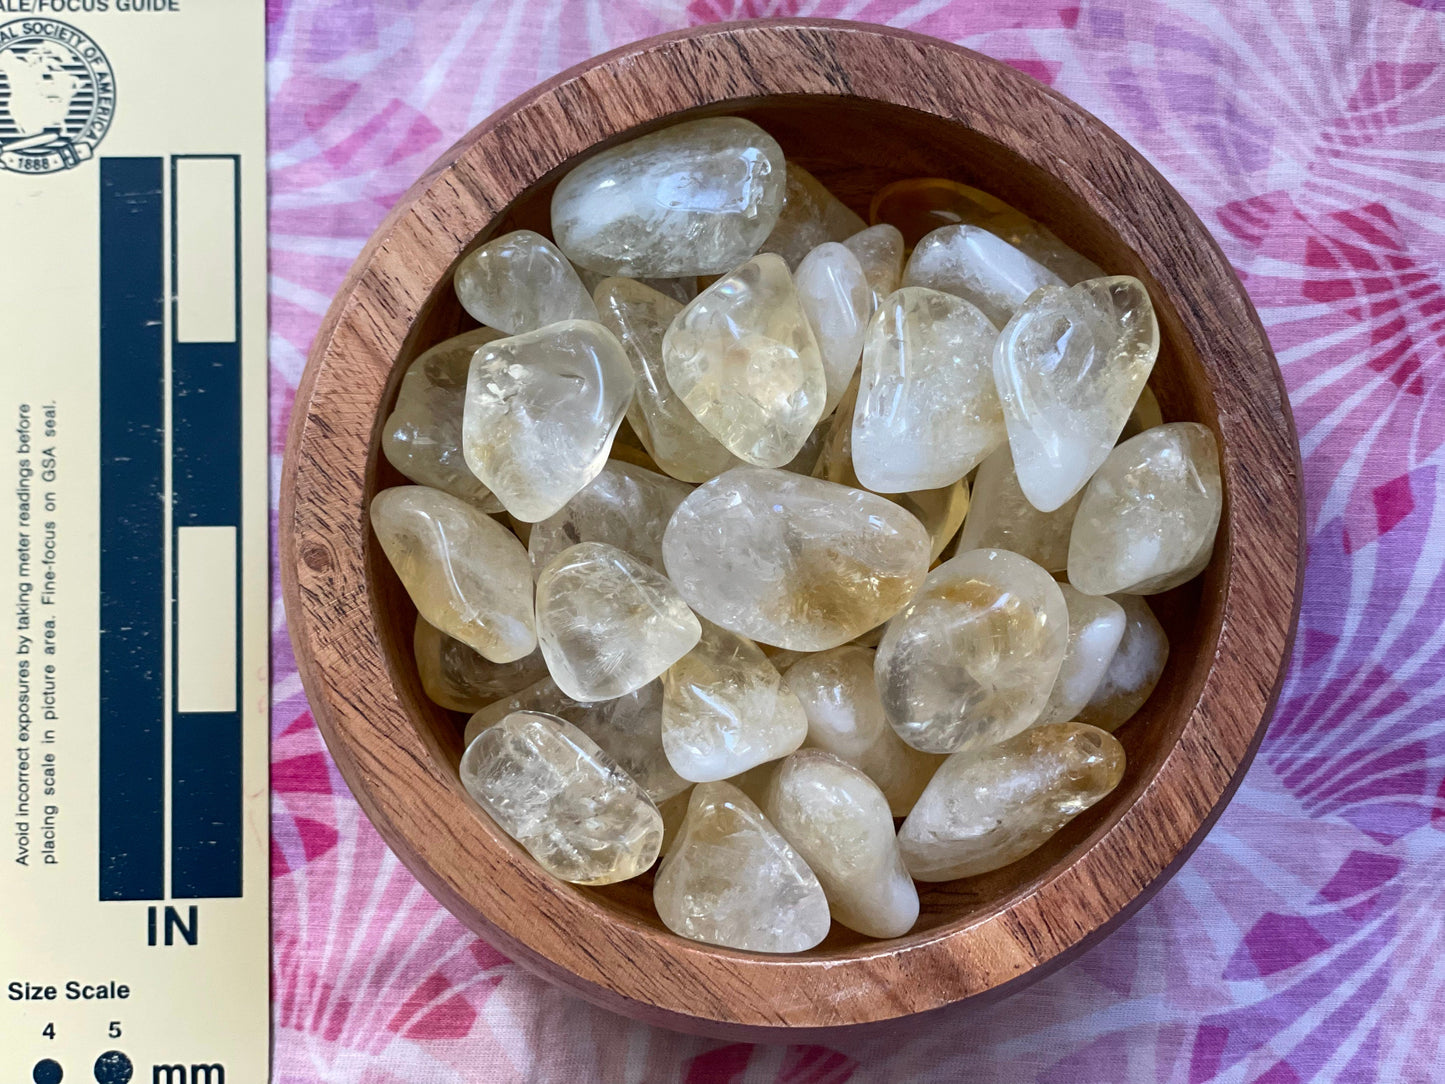 Tumbled citrine | Solar Plexus Chakra Stone | Crystal for Prosperity and Joy